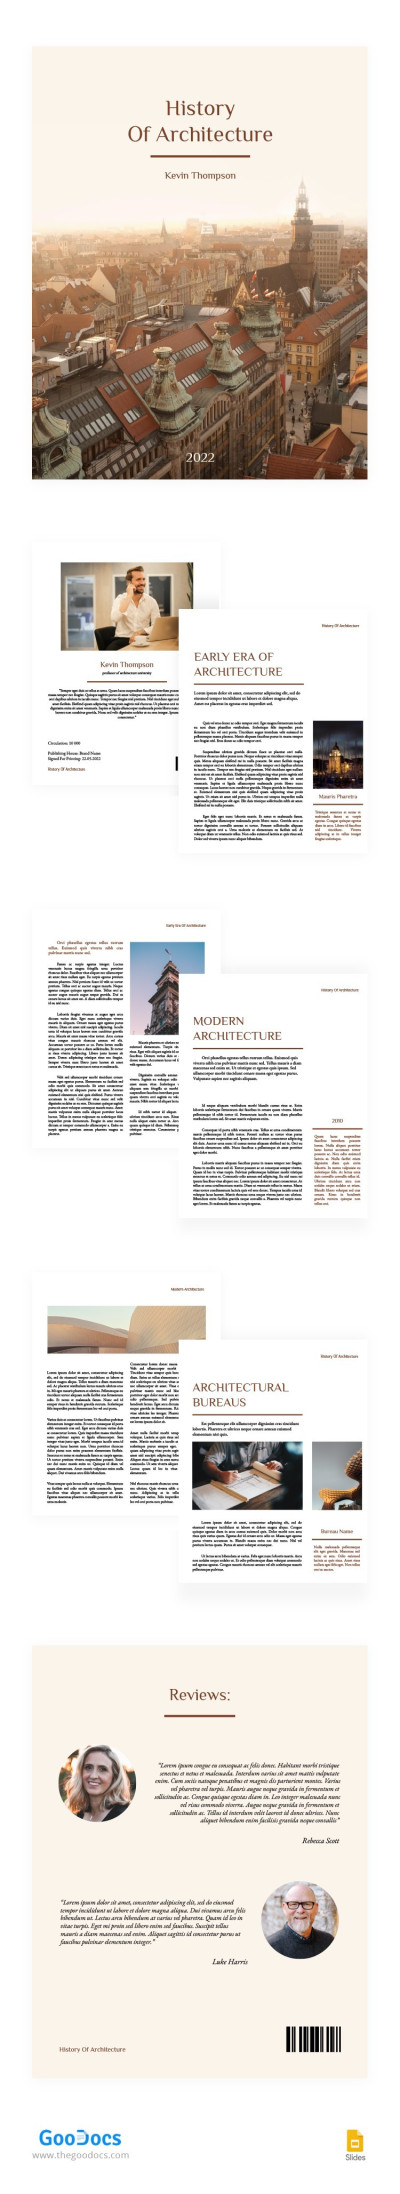 Simple Academic Book - Architecture Books